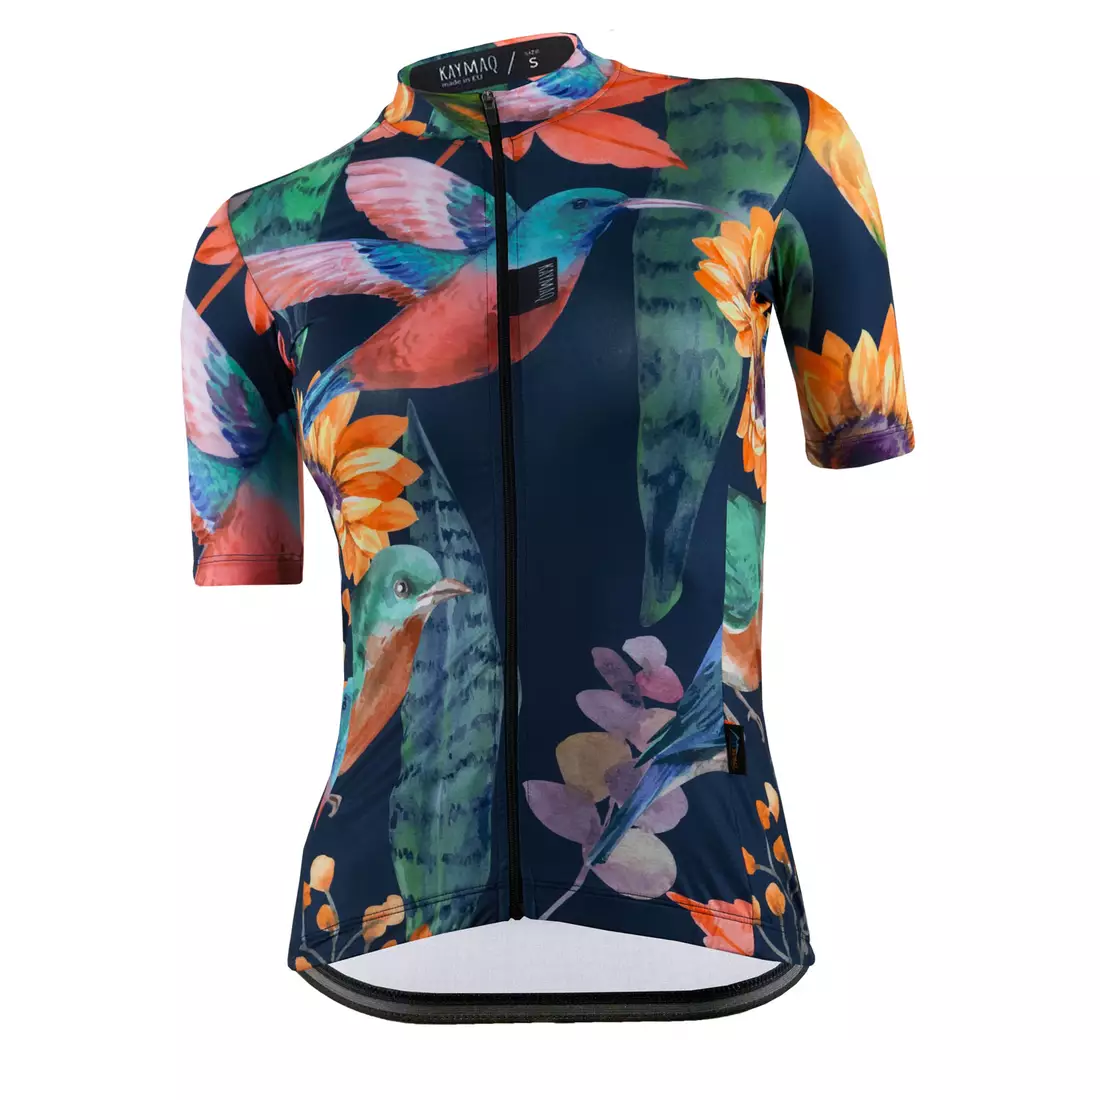 KAYMAQ DESIGN W1-W13 women's cycling short sleeve jersey